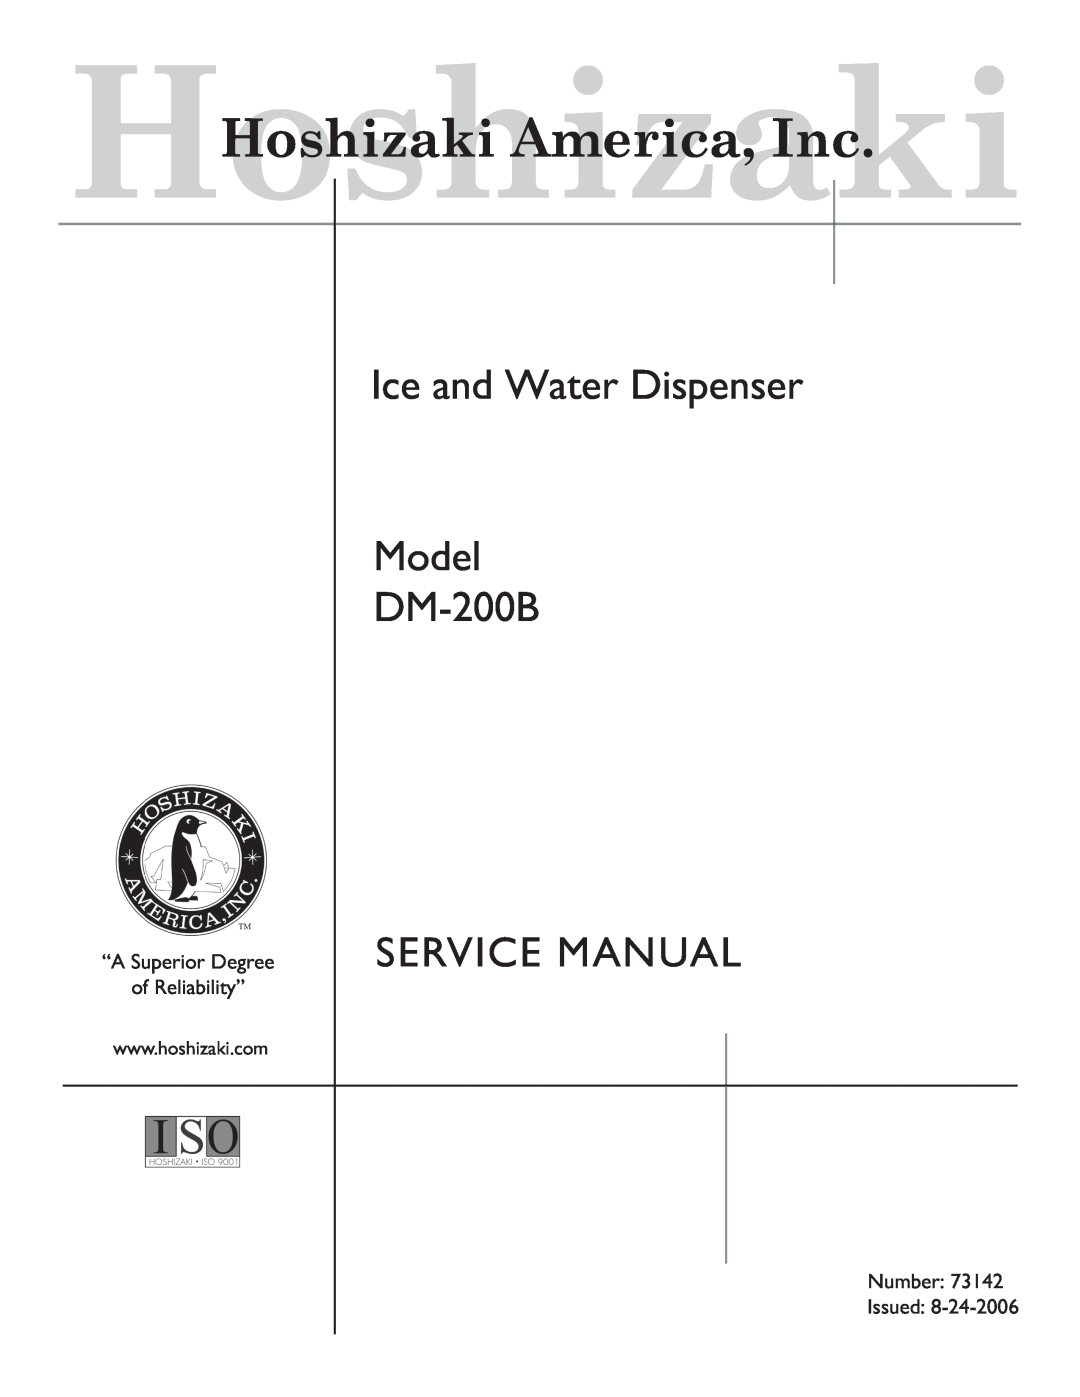 Hoshizaki service manual Ice and Water Dispenser Model DM-200B SERVICE MANUAL, HoshizakiHoshizaki America, Inc 